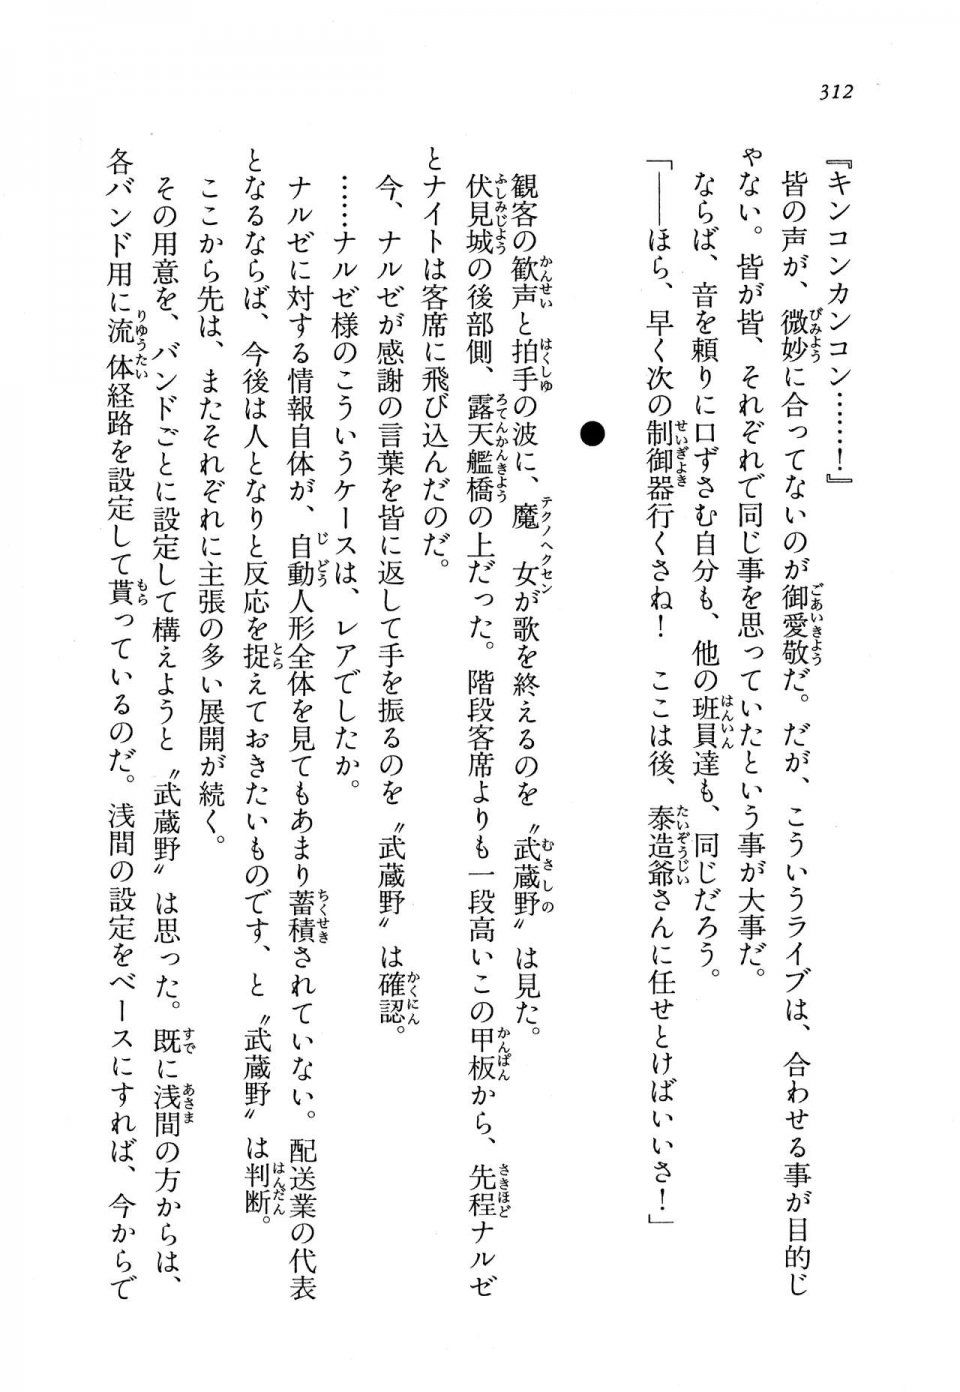 Kyoukai Senjou no Horizon BD Special Mininovel Vol 8(4B) - Photo #316